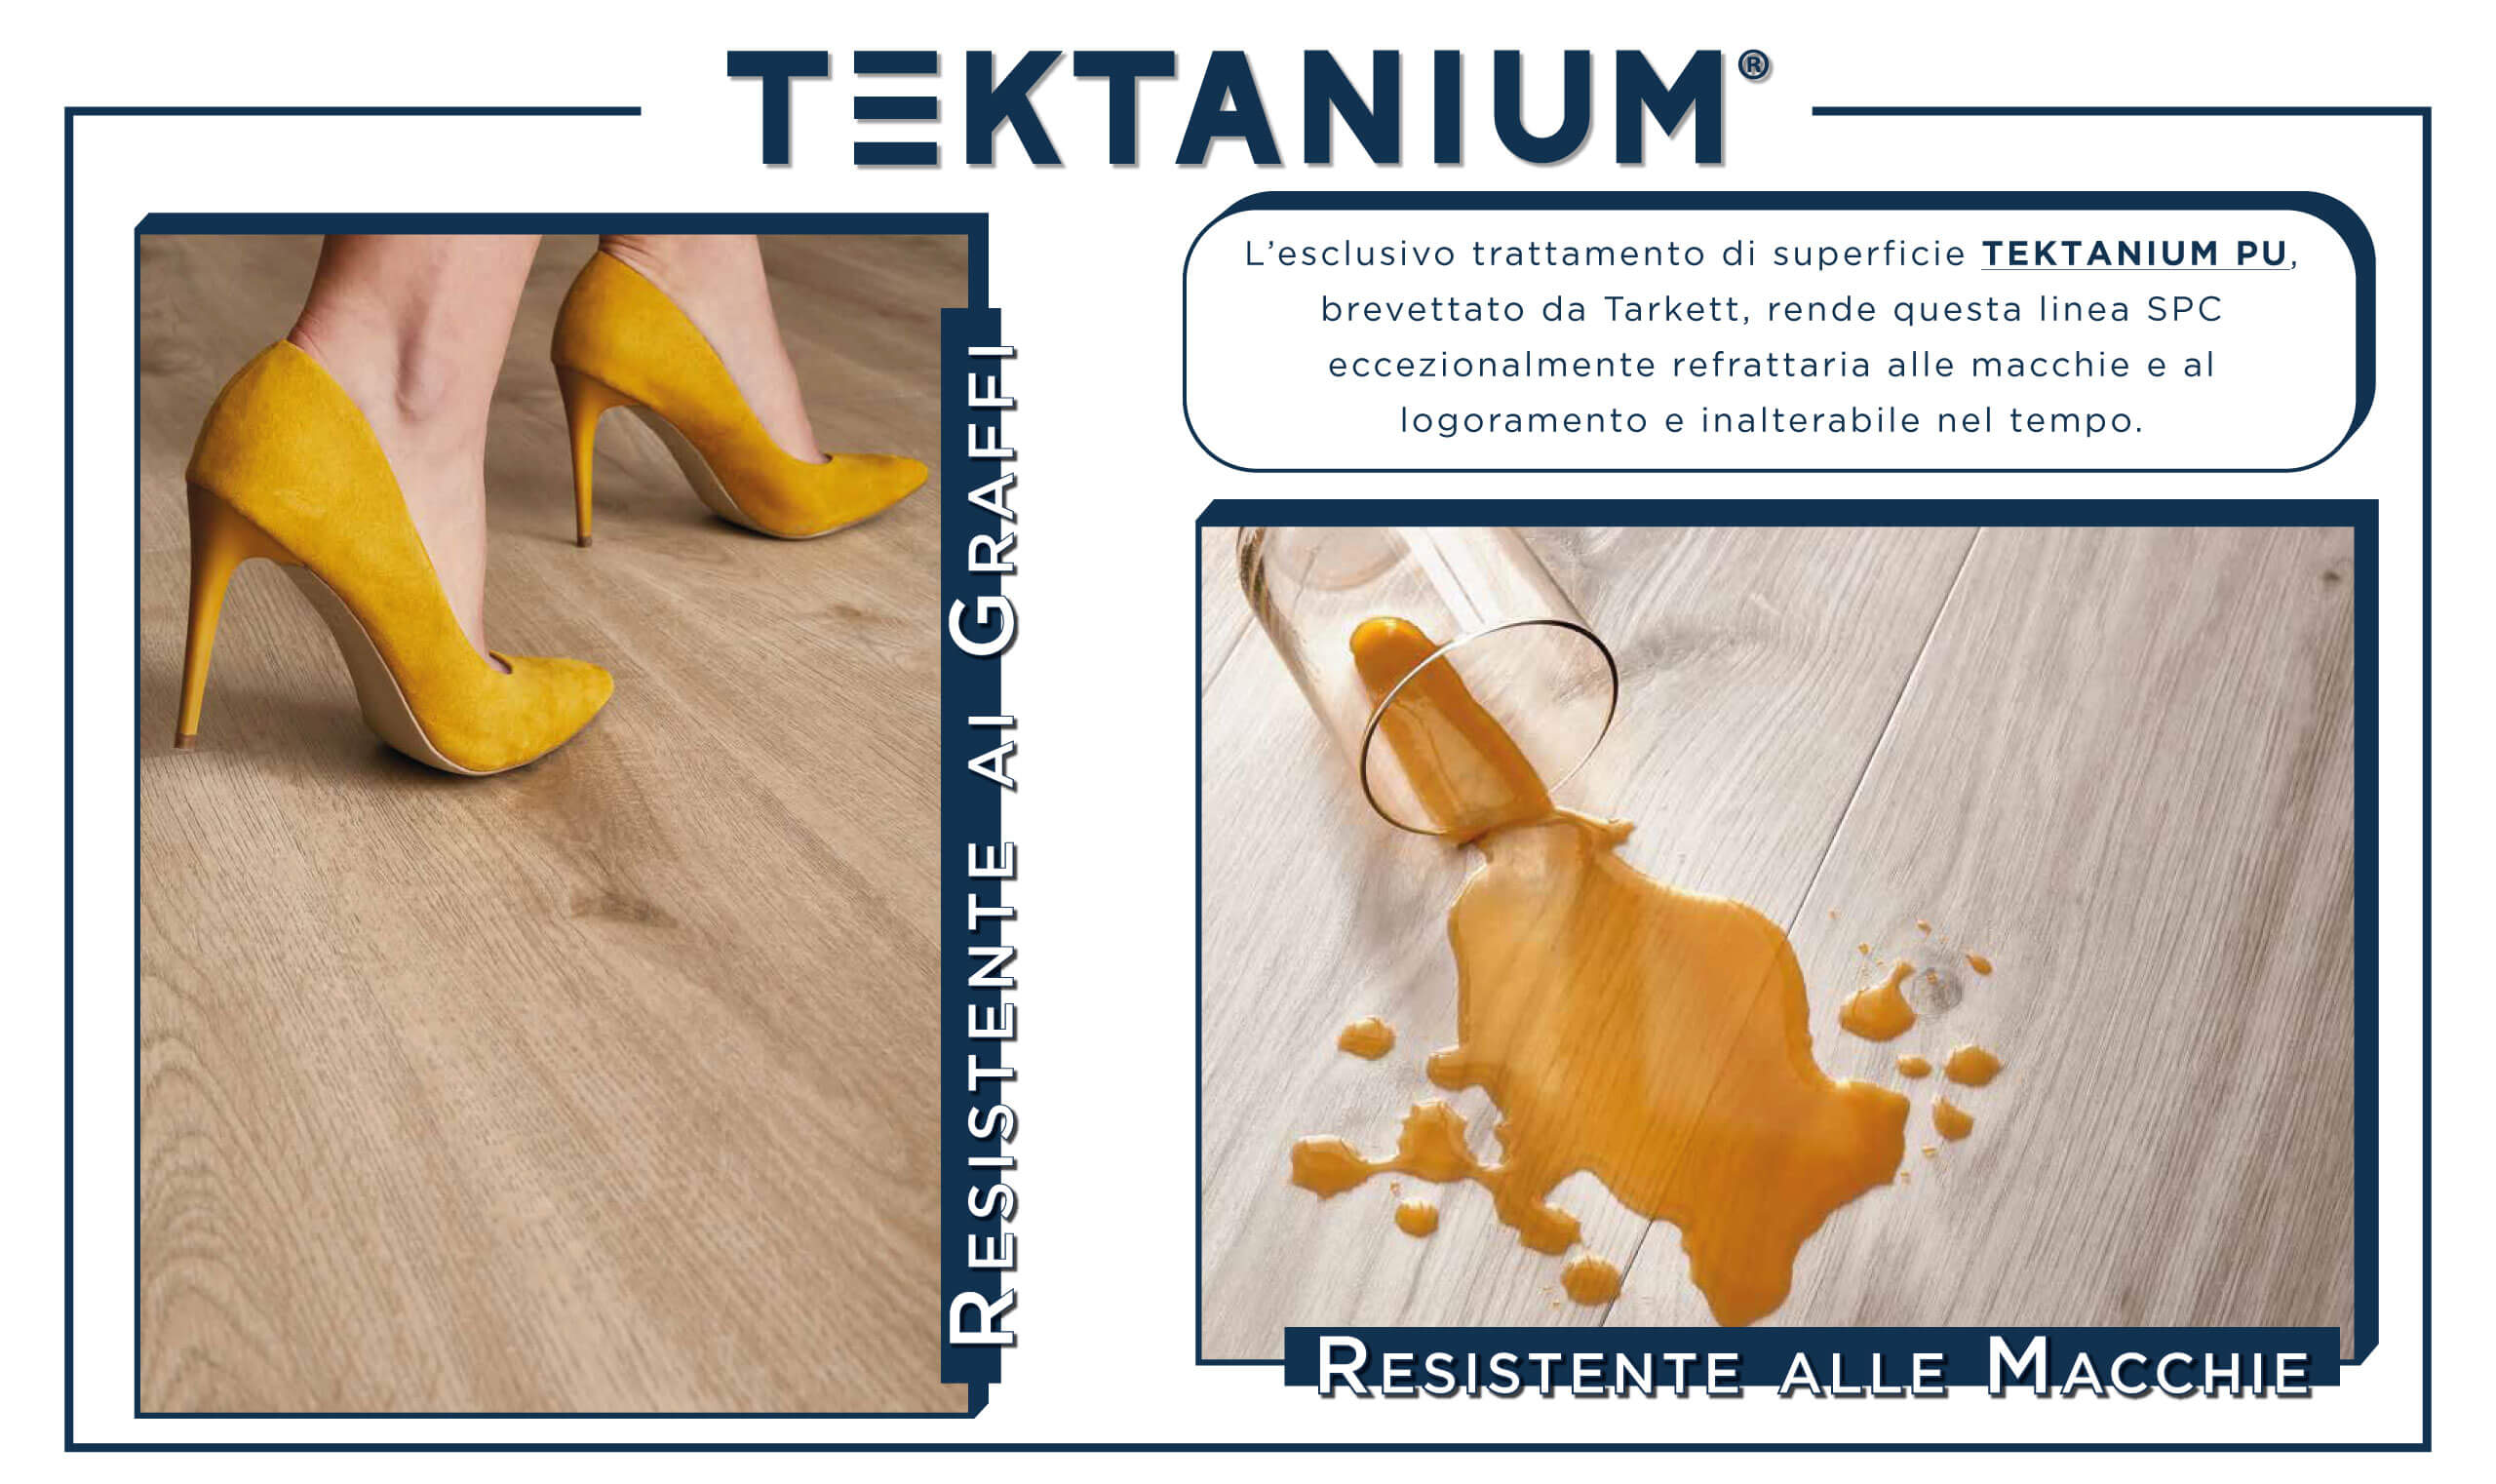 Tecnologia Tektanium massima resistenza graffi macchie Tarkett Elegance 55 Rigid